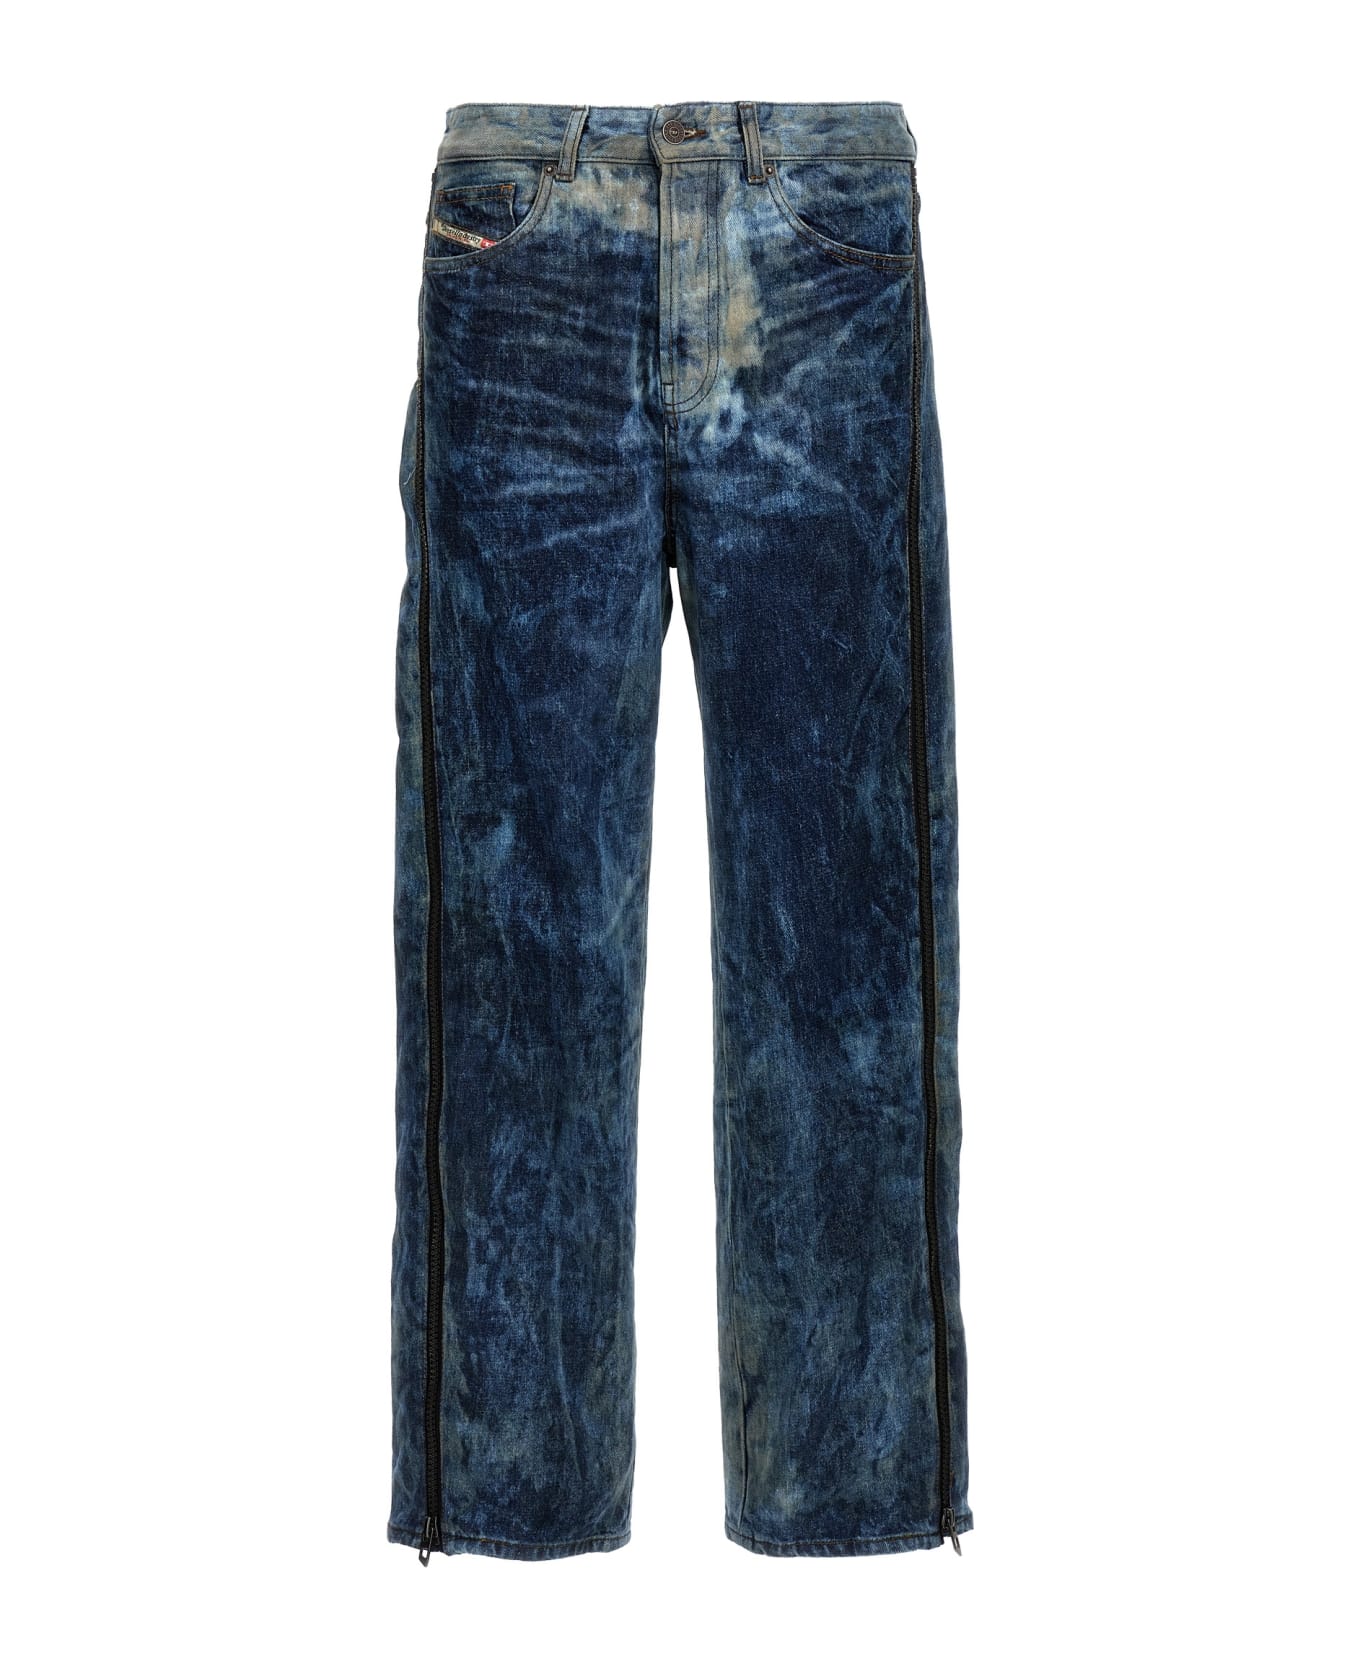 Diesel 'd-rise 0pgax' Jeans - Blue